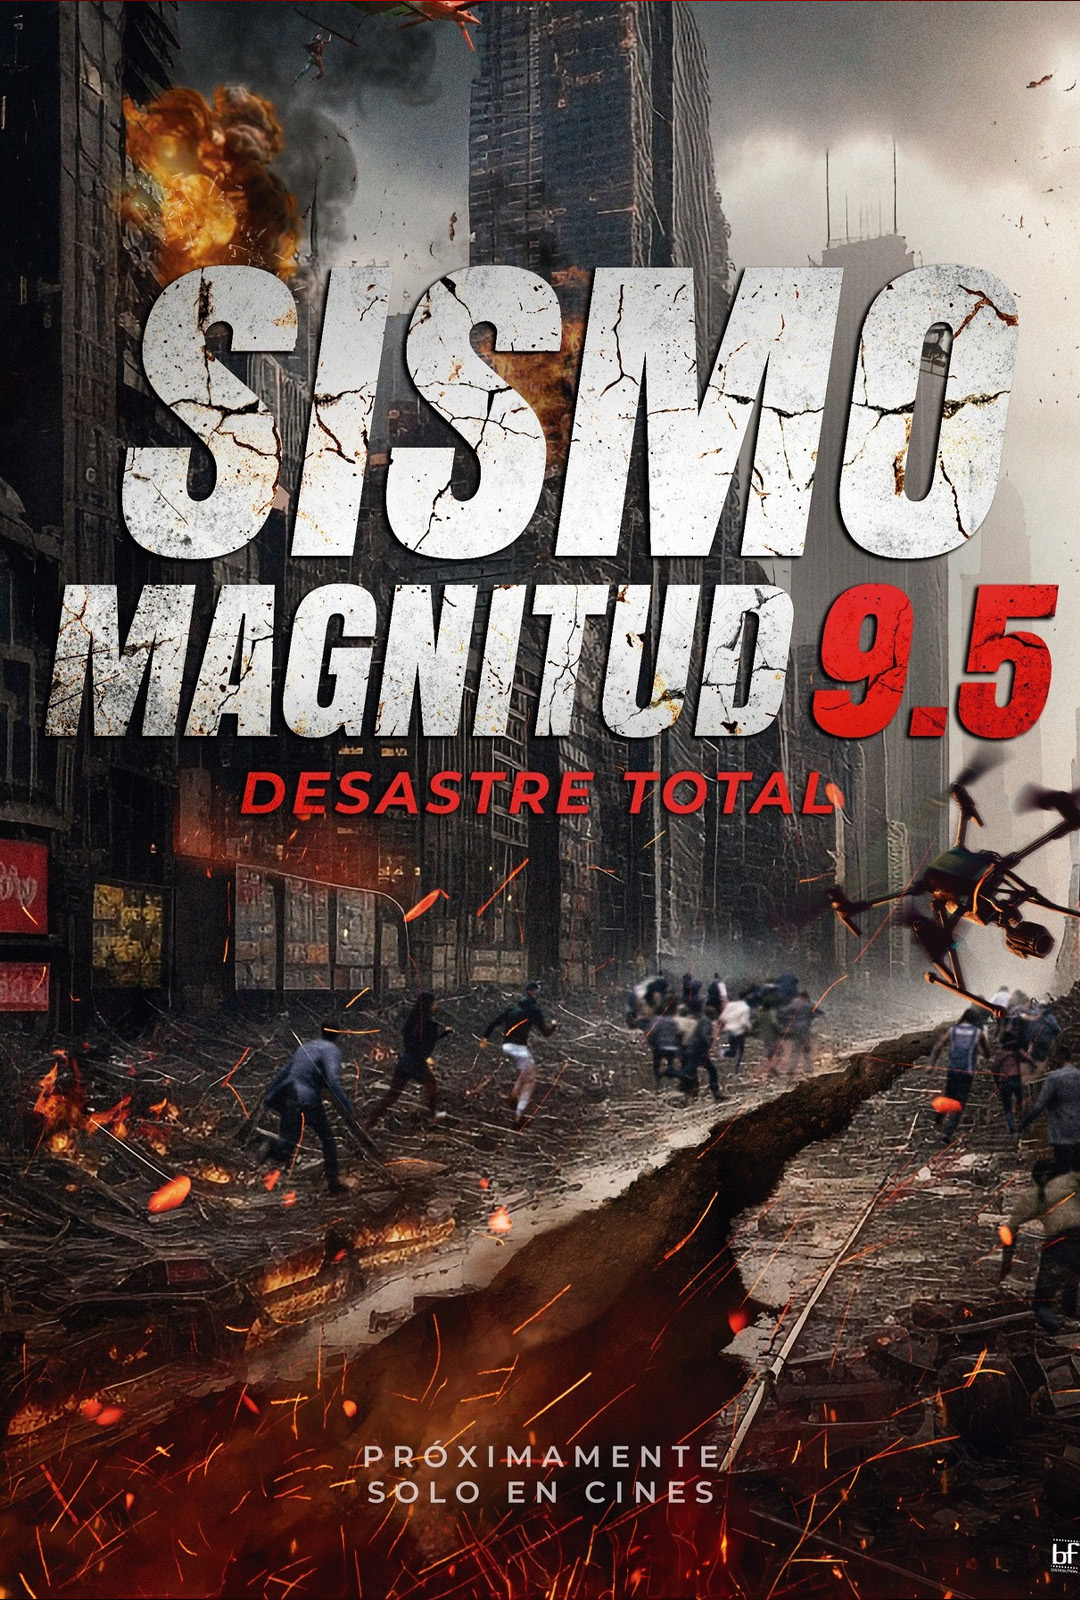 Sismo Magnitud 9.5